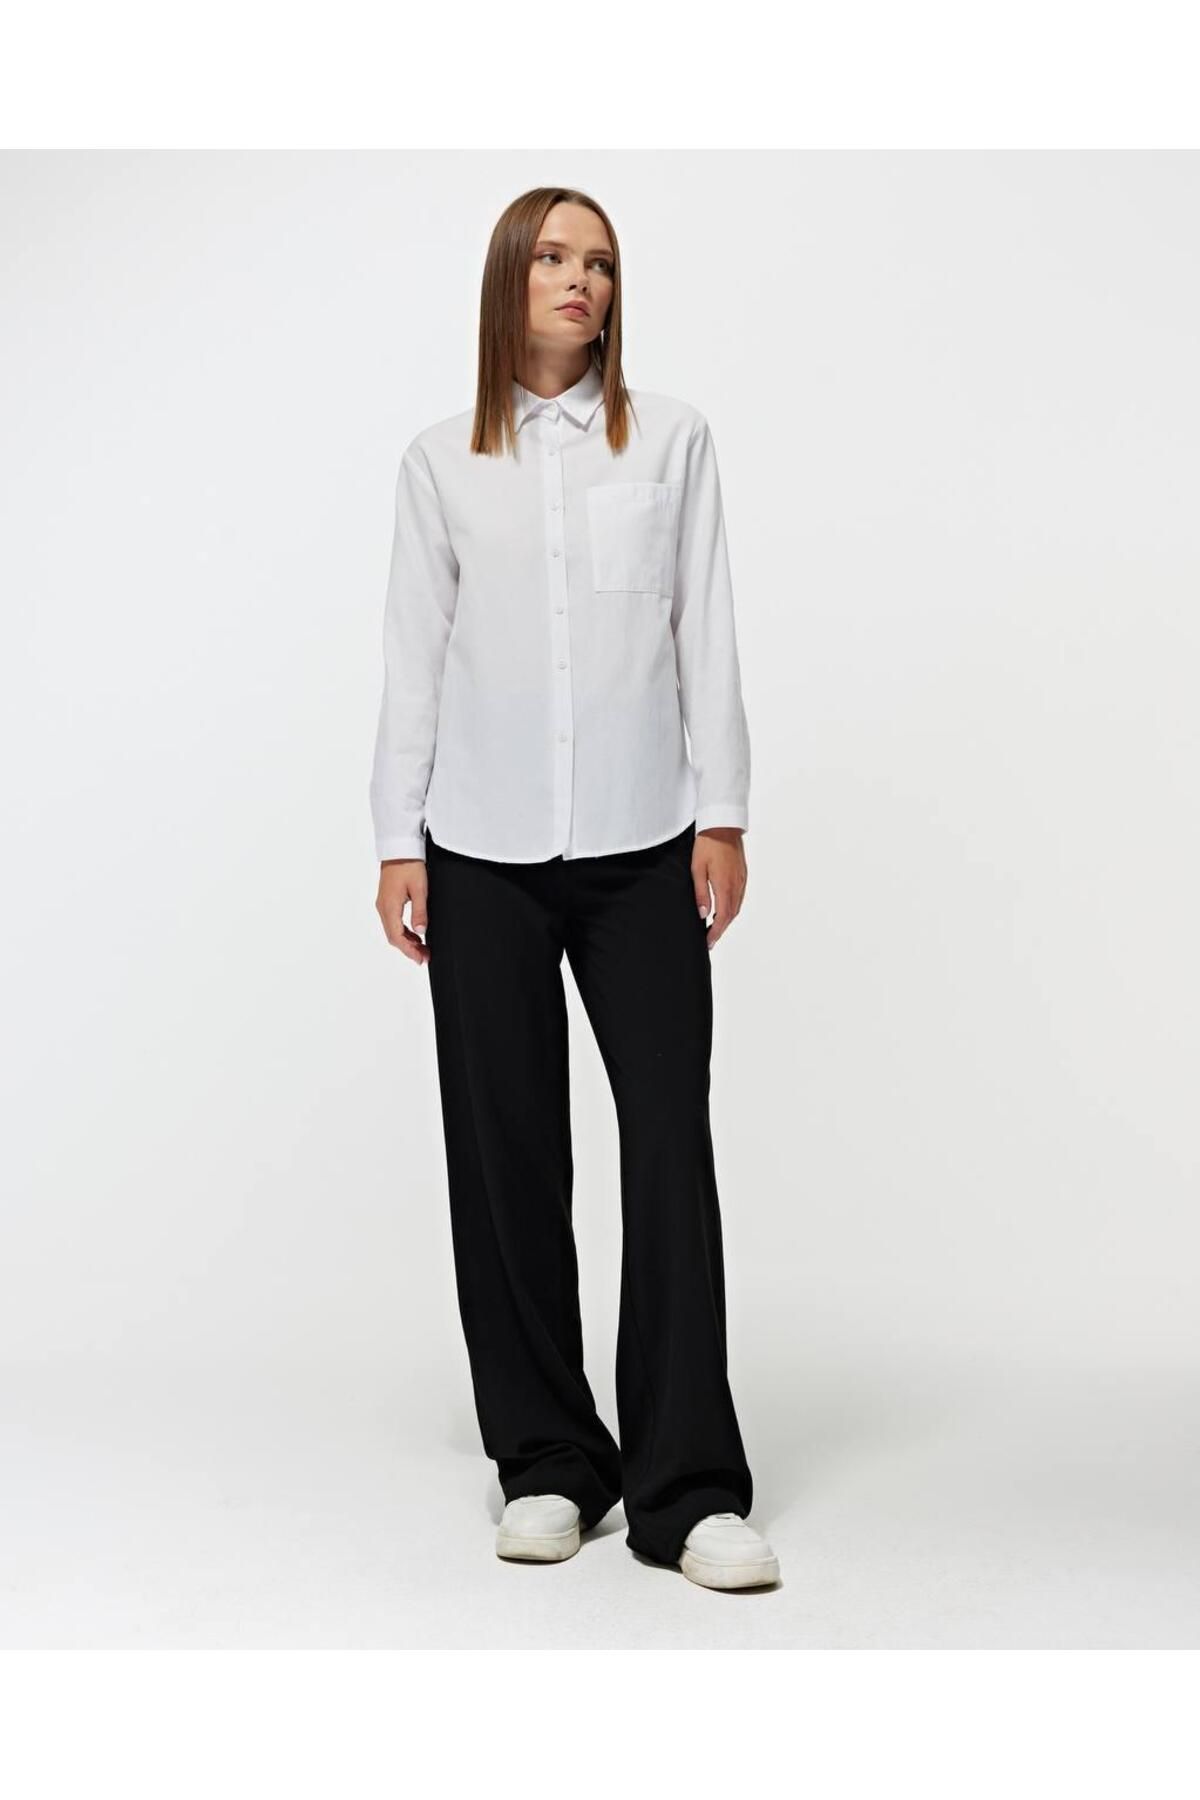 Mixray Kadın Beyaz %100 Pamuk  Cep  Detaylı Gömlek